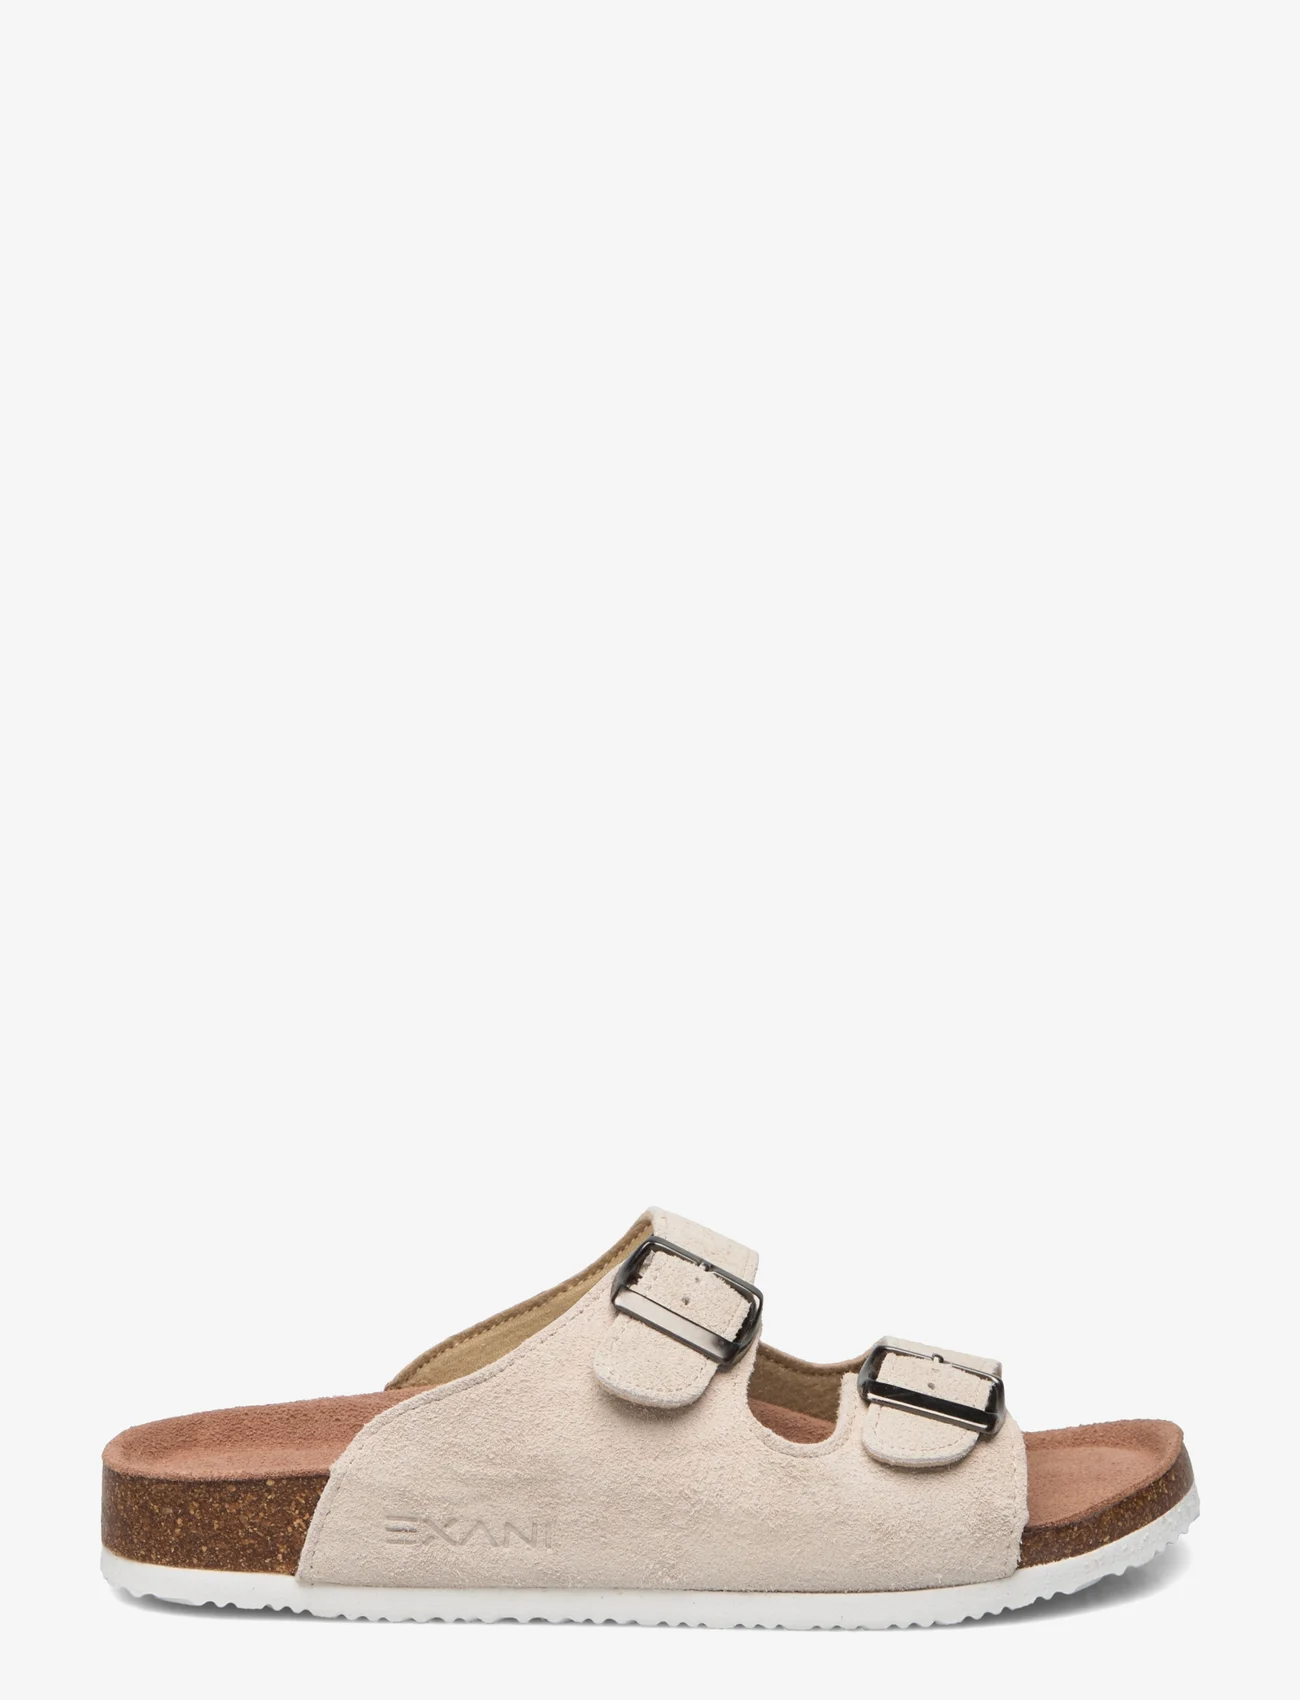 Exani - SPECTRA SUEDE W - flat sandals - beige - 1